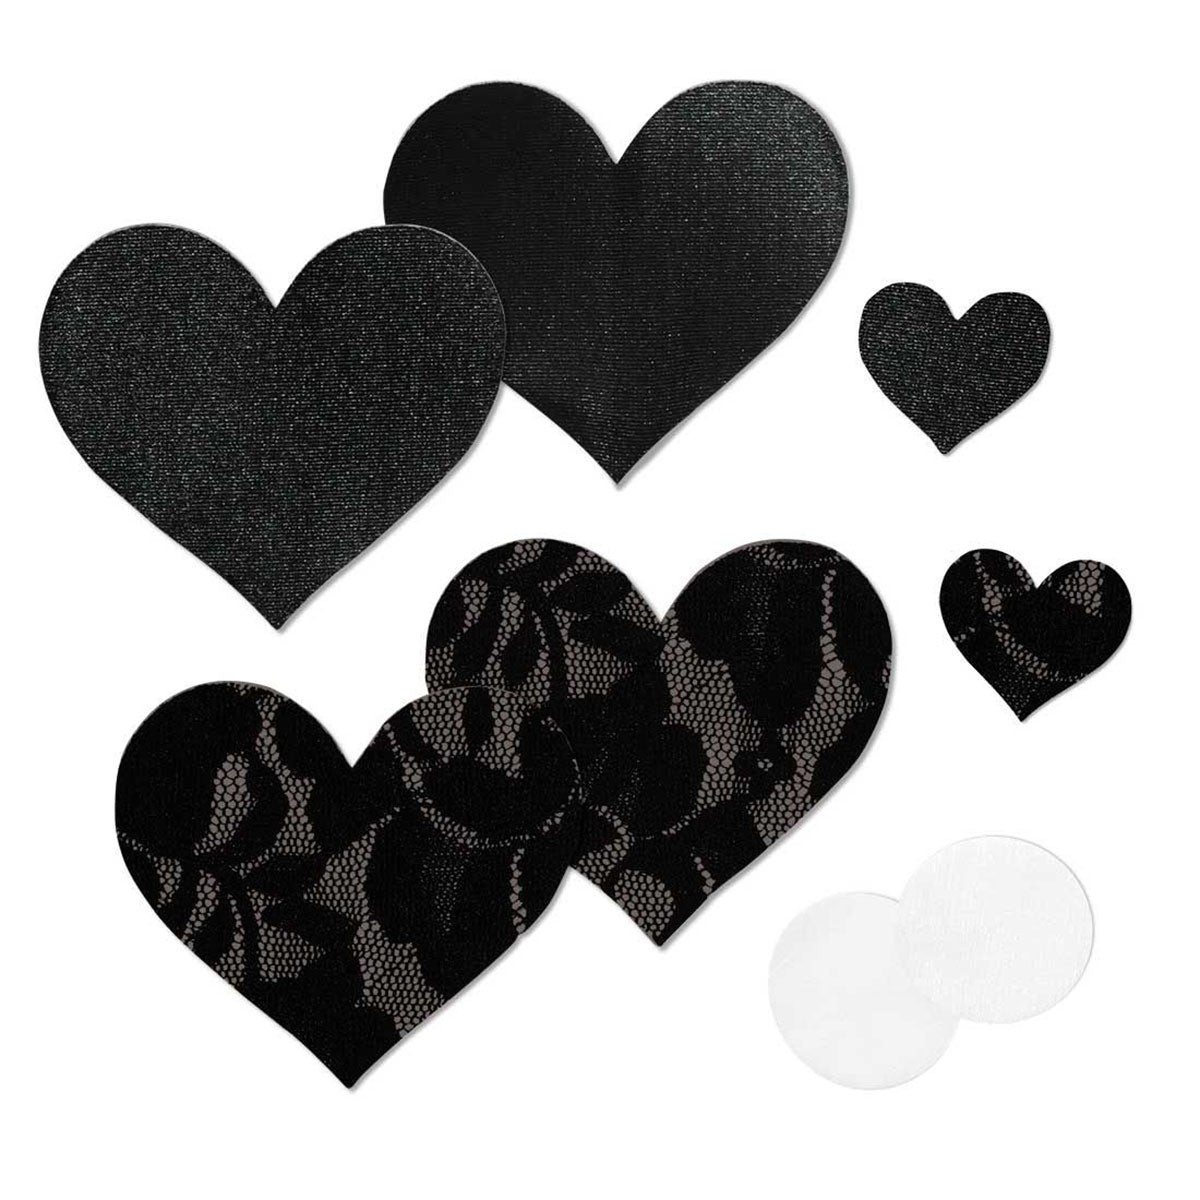 Nippies Basics - Black Hearts